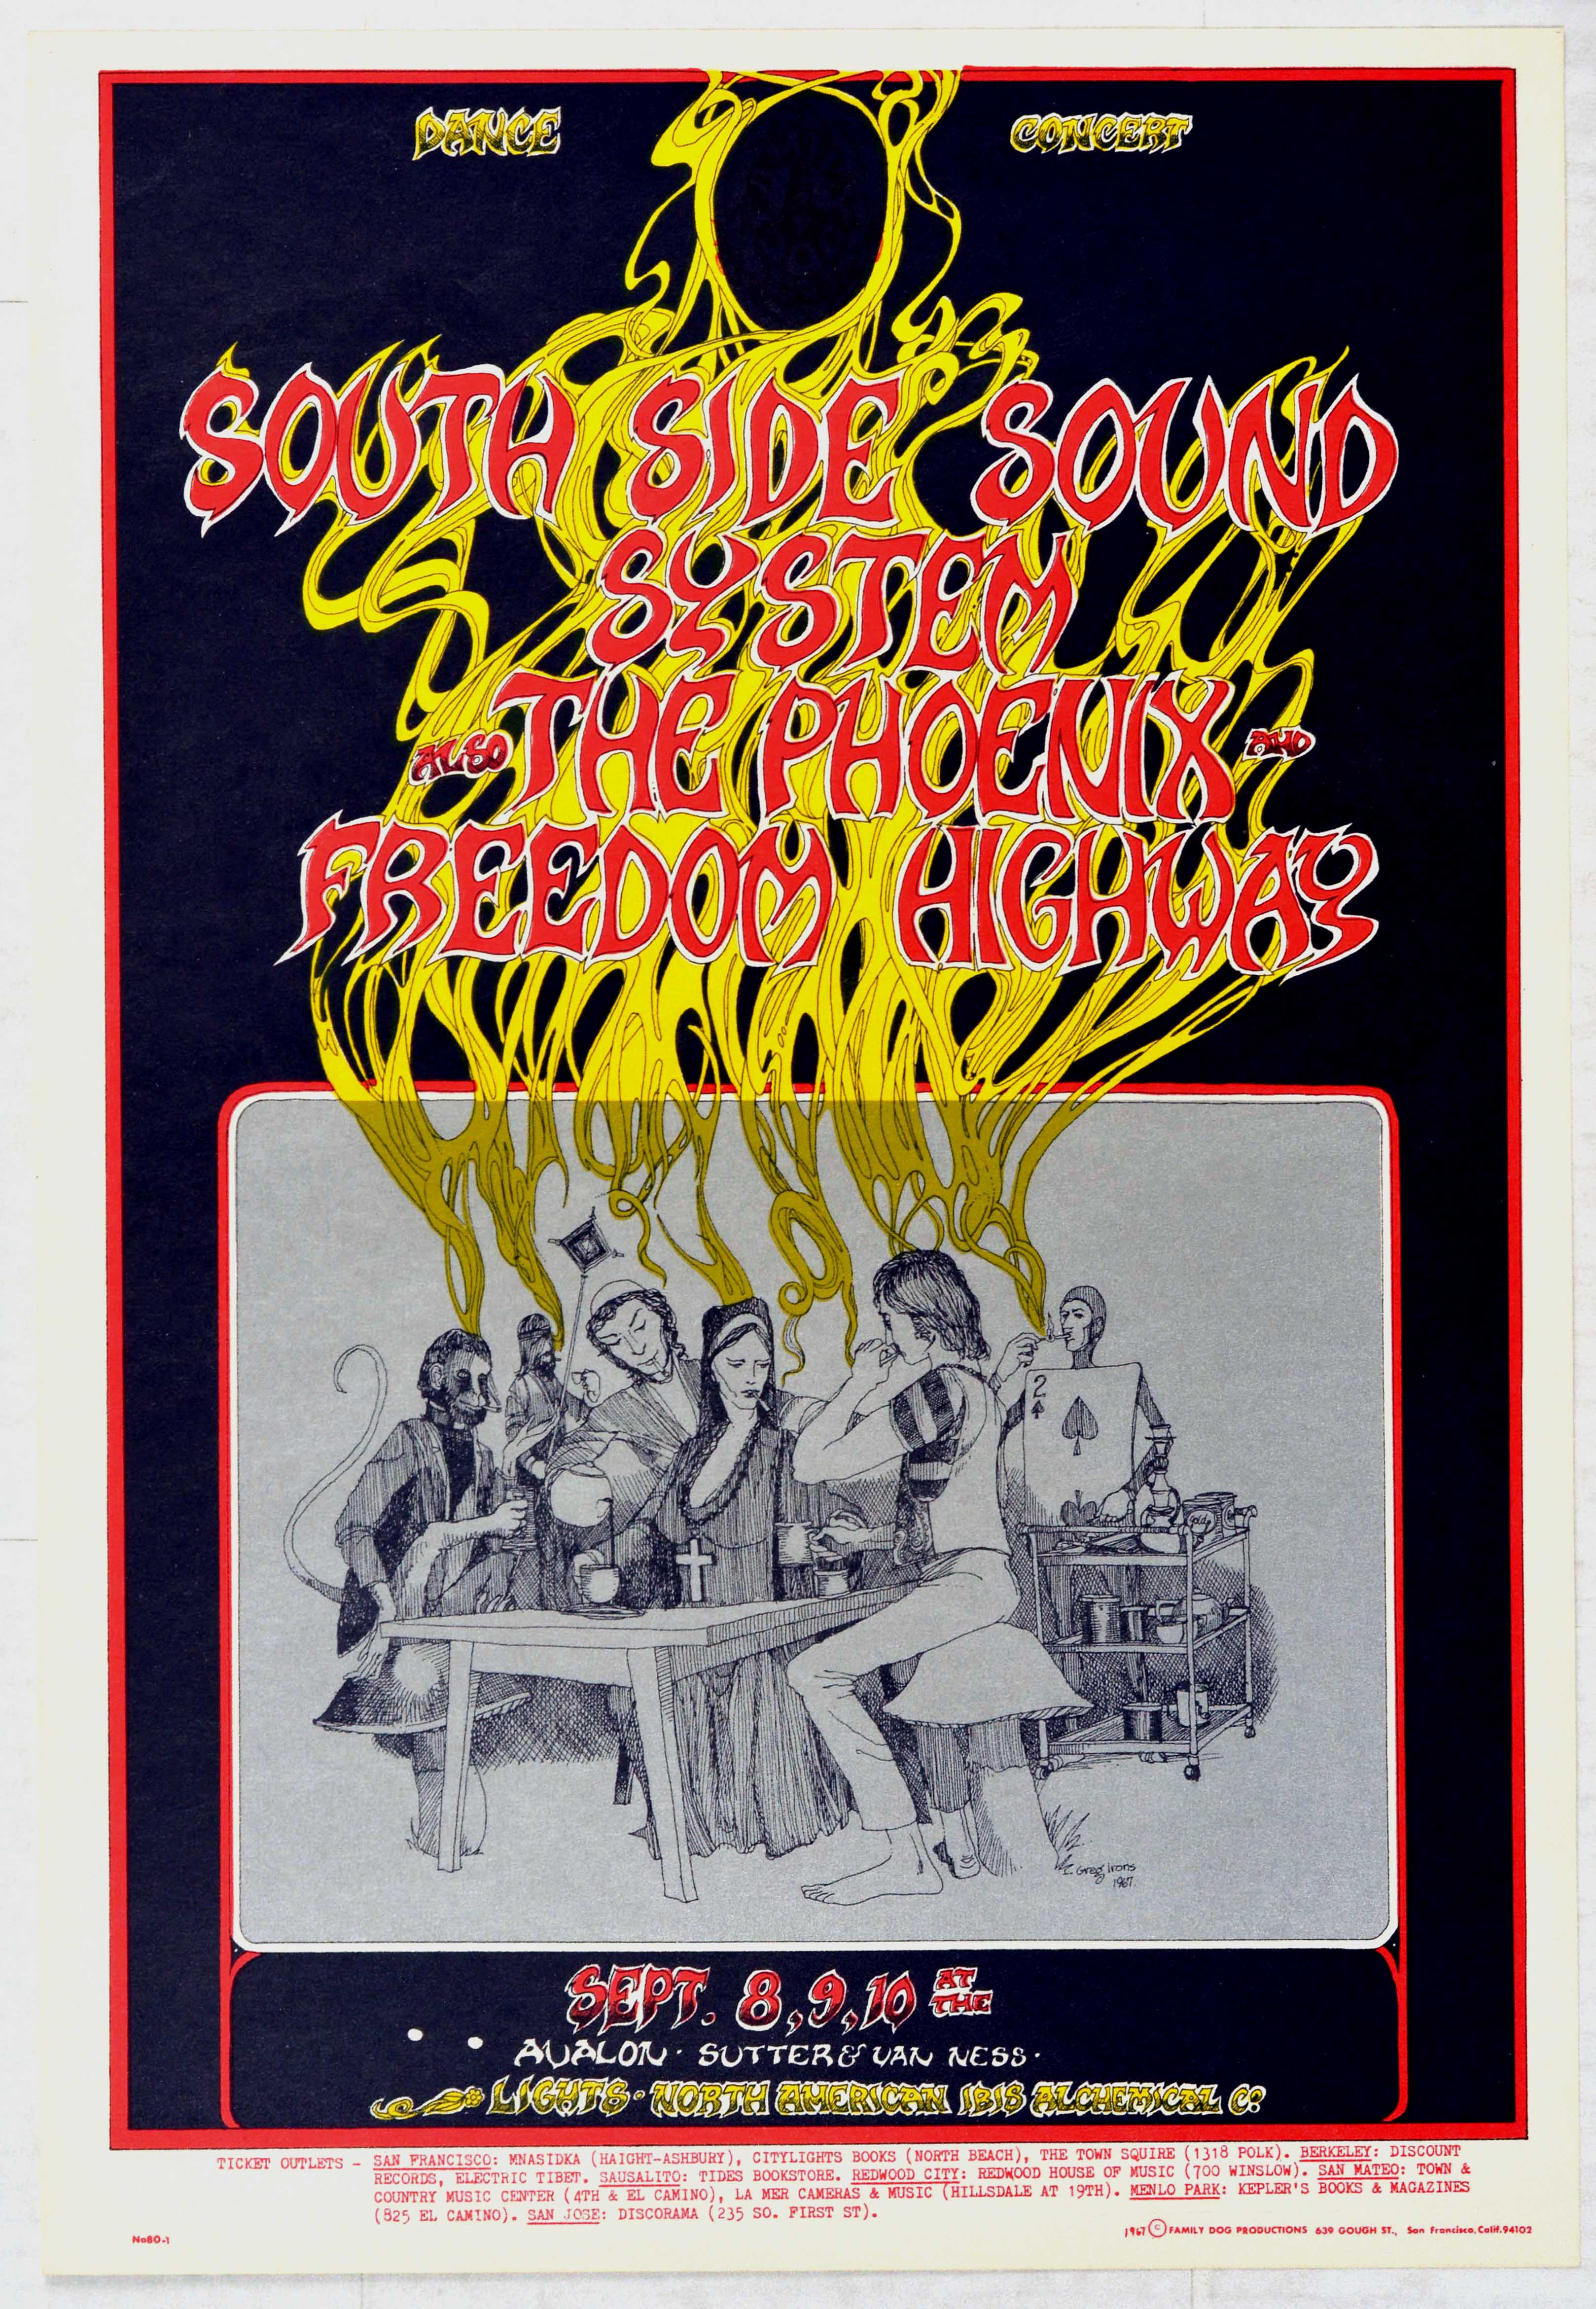 Rock Concert Poster South Side Sound System